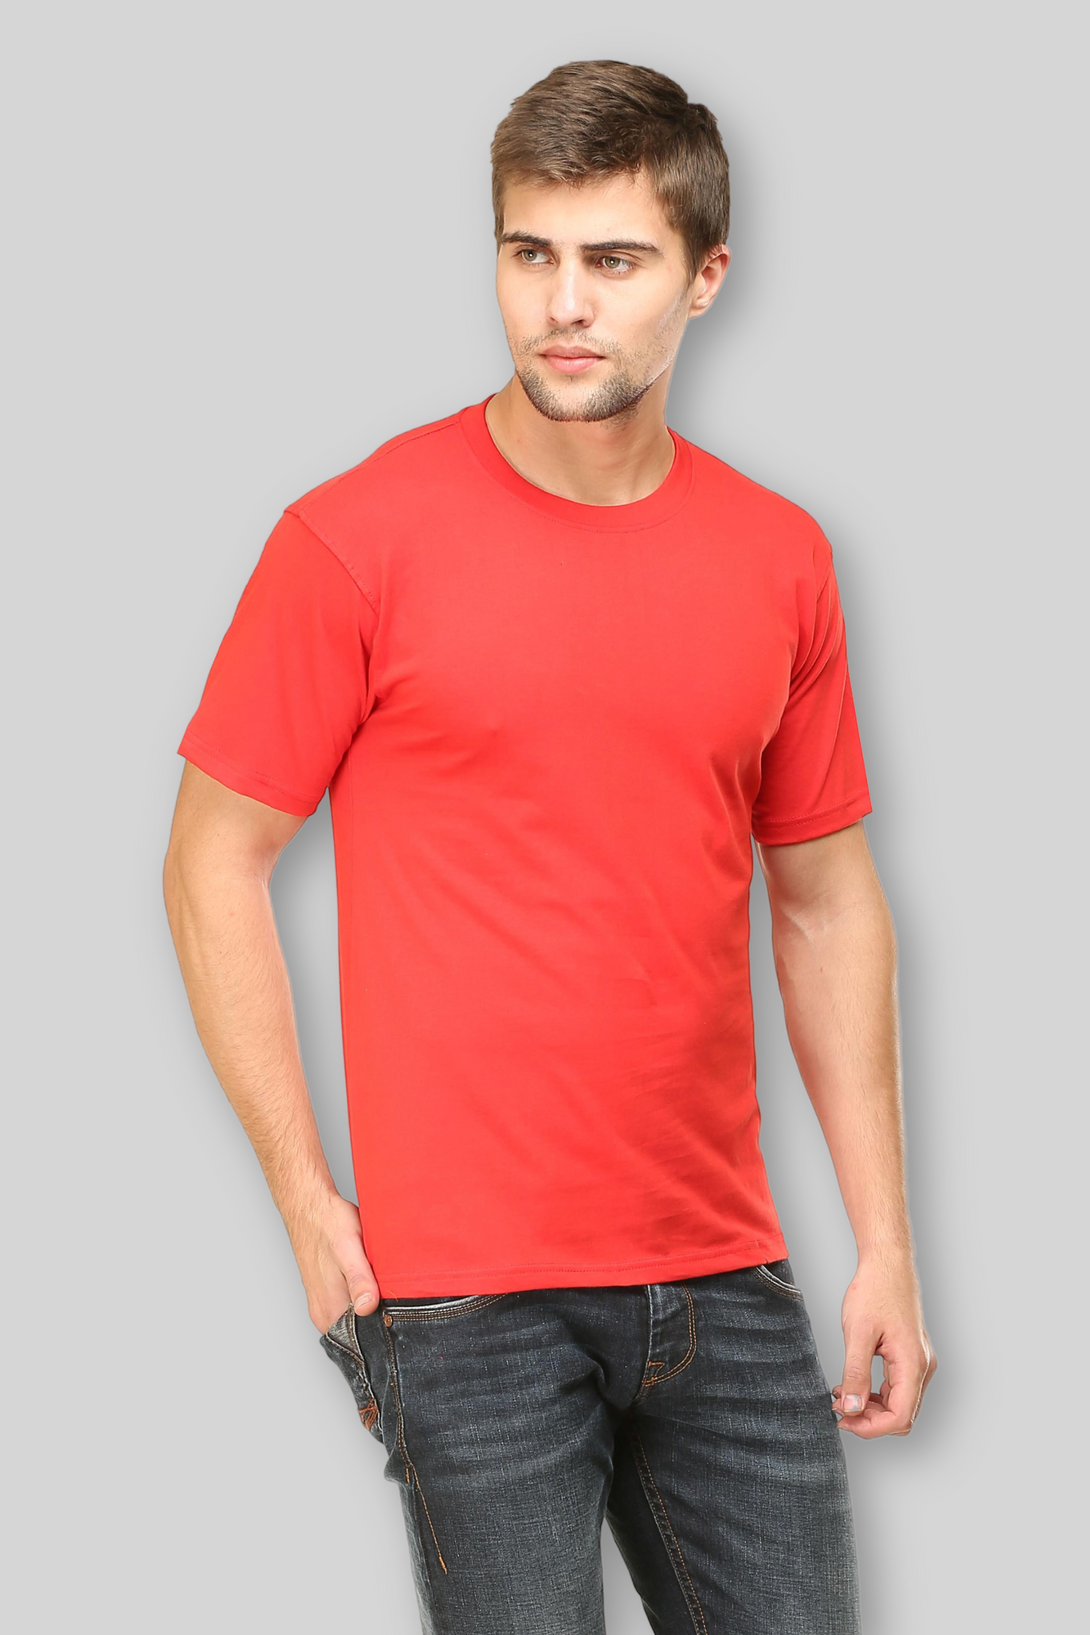 Red T-Shirt For Men - WowWaves - 3